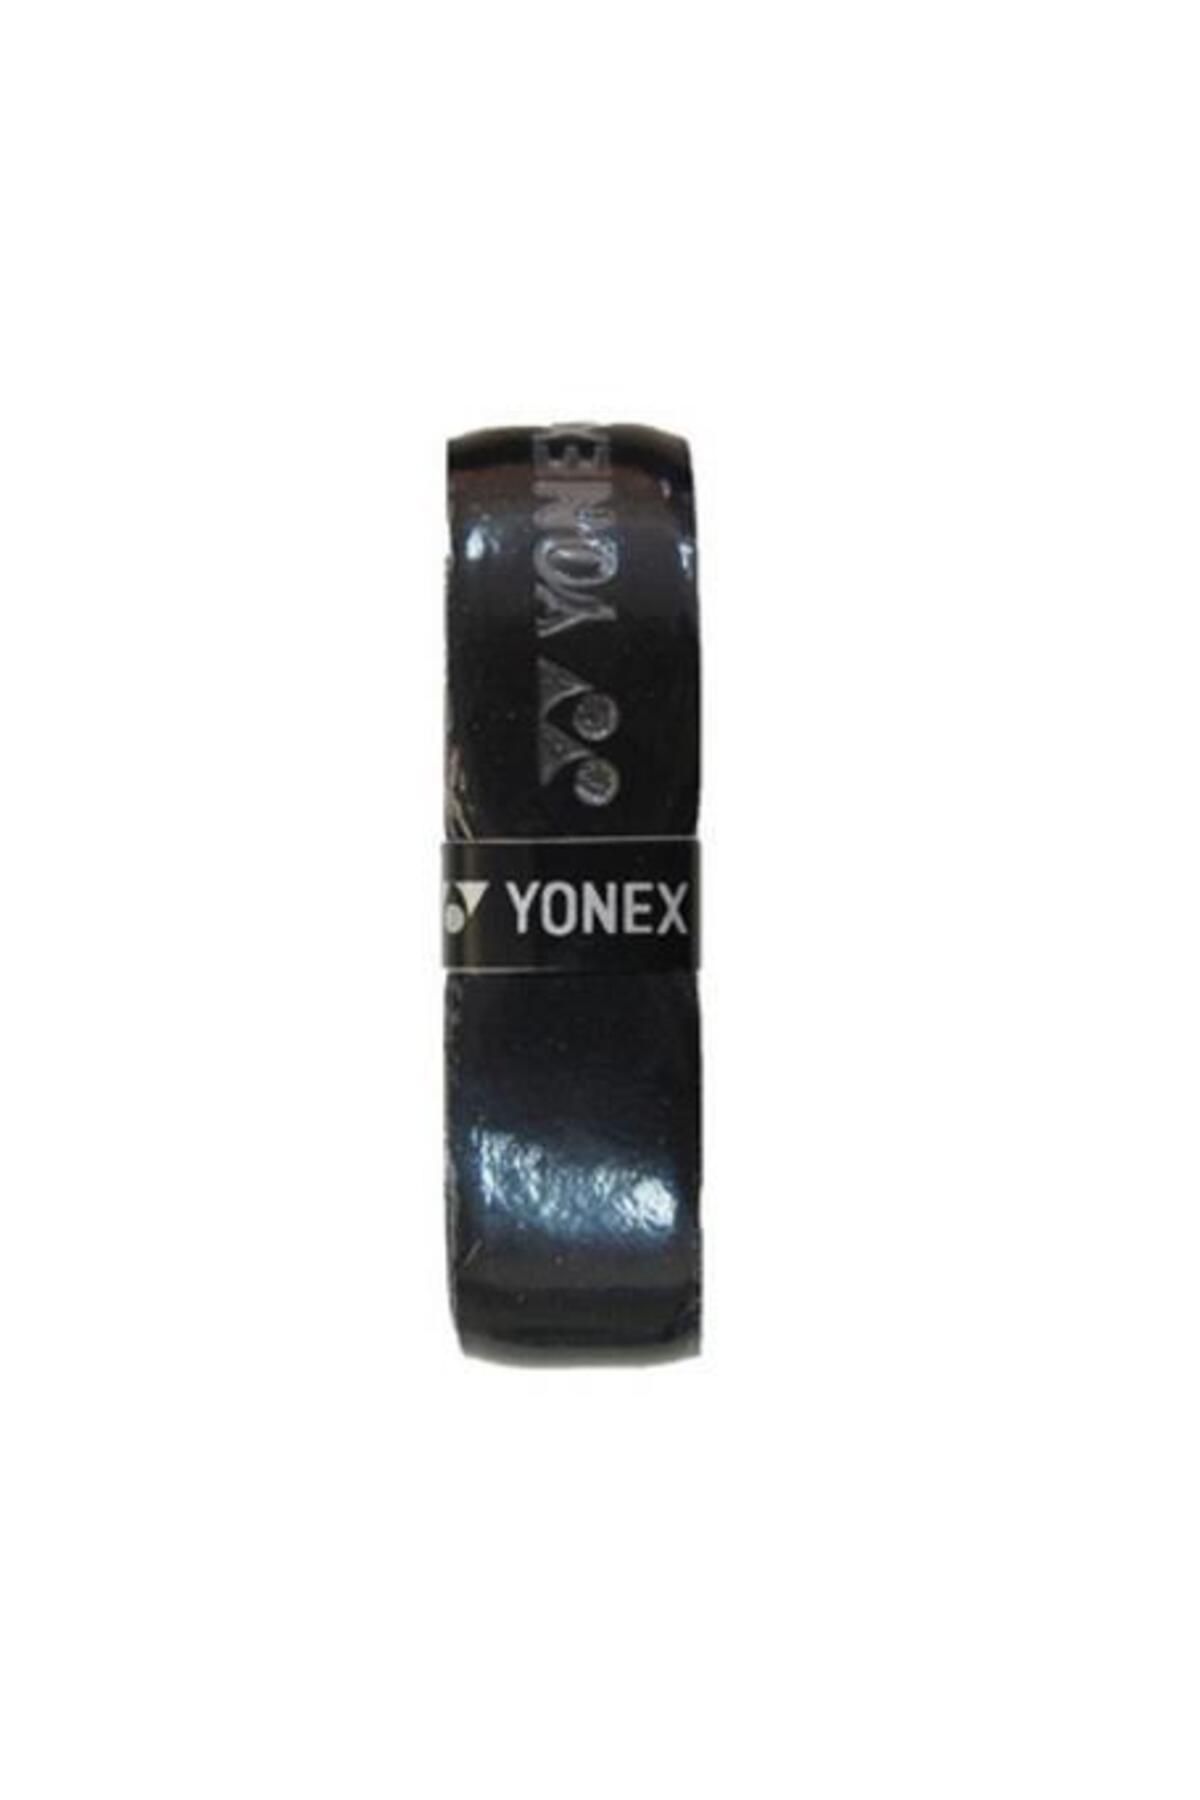 Yonex Ac 420 Soft Grıp (ANA GRIP) Tekli- Siyah